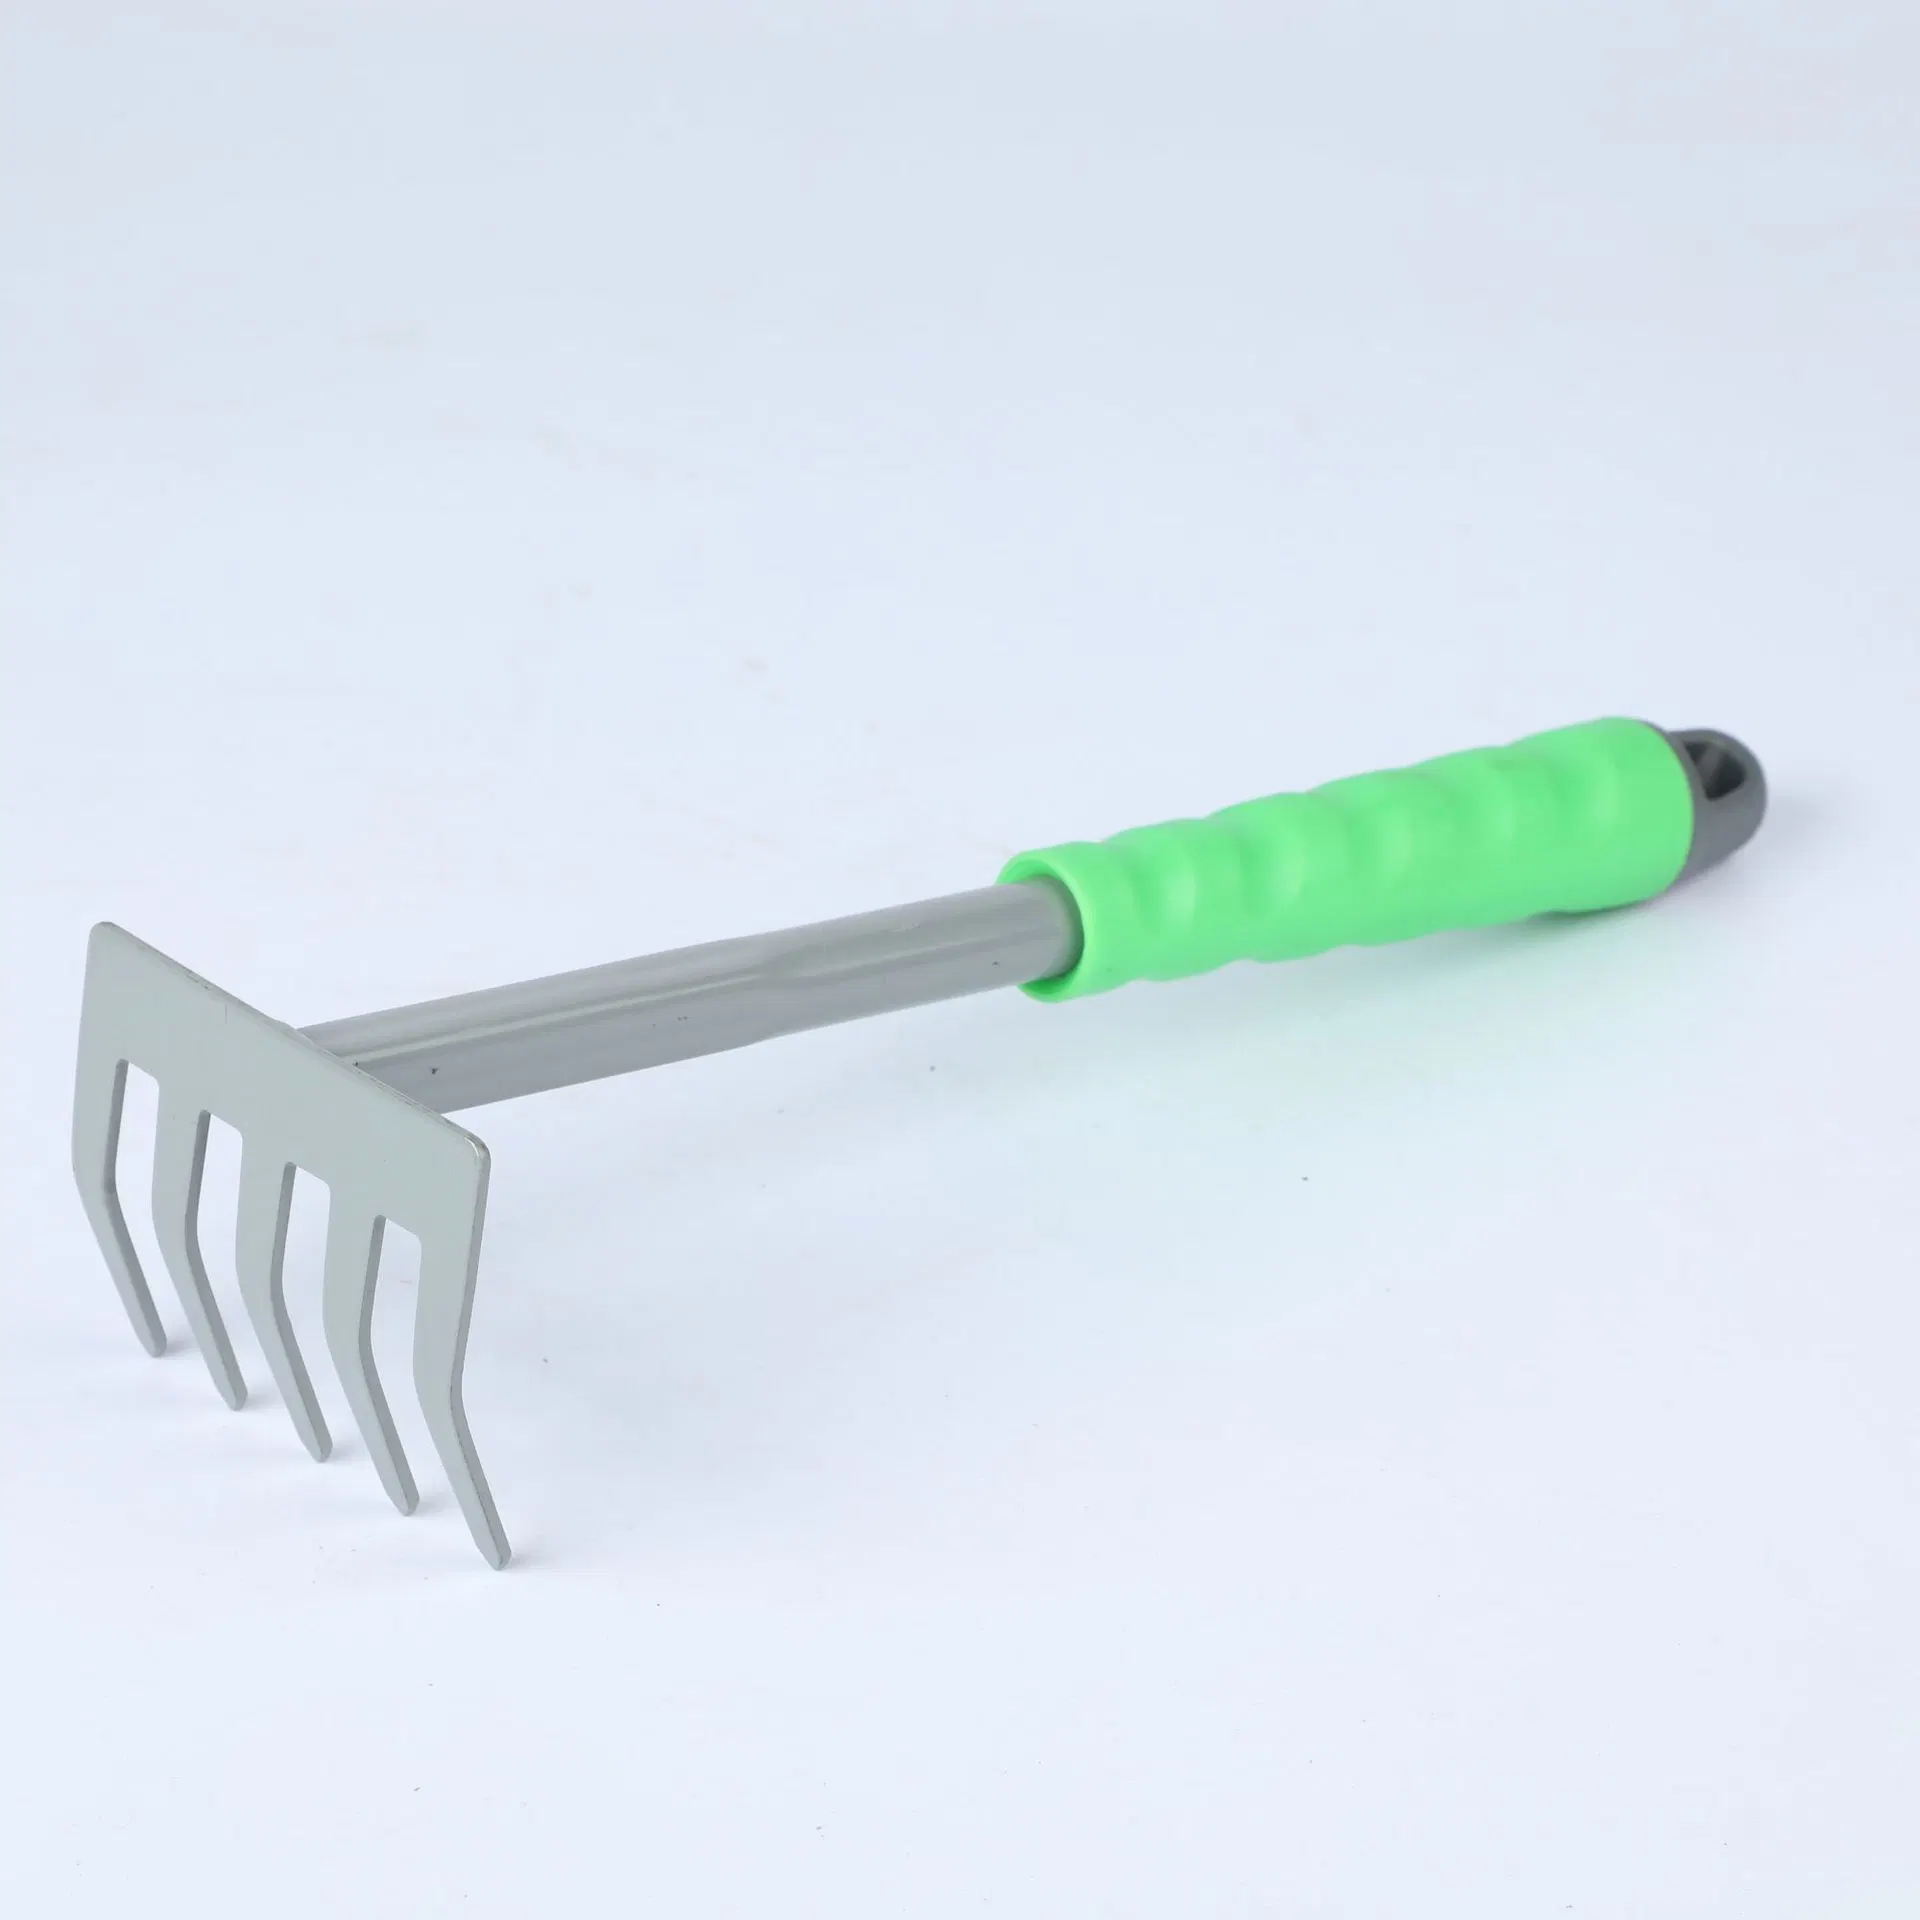 Cheap Plastic Handheld Garden Tool Trowel, Transplanter and Cultivator Set